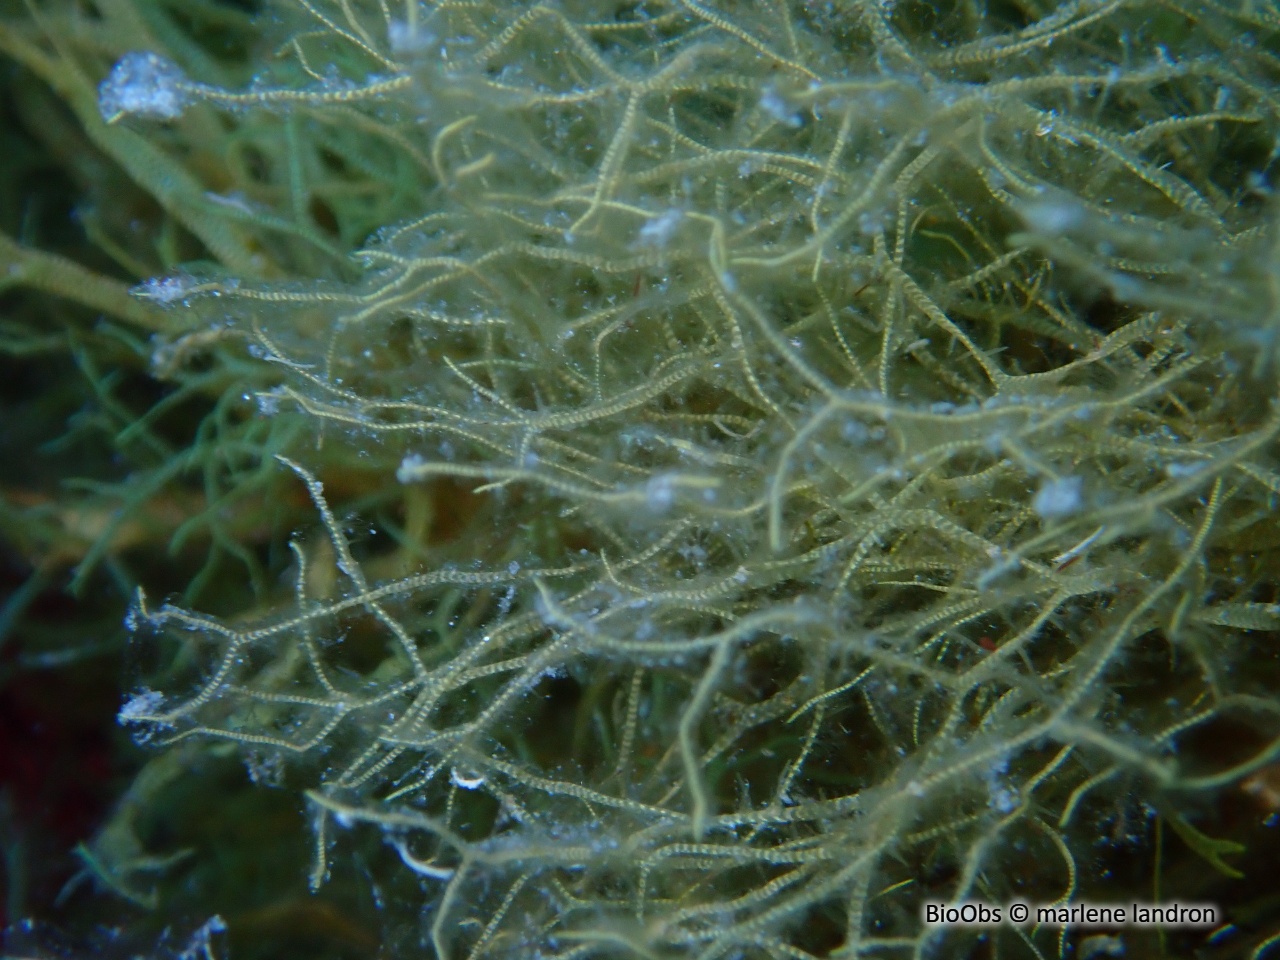 Dictyote jaune - Dictyota implexa - marlene landron - BioObs